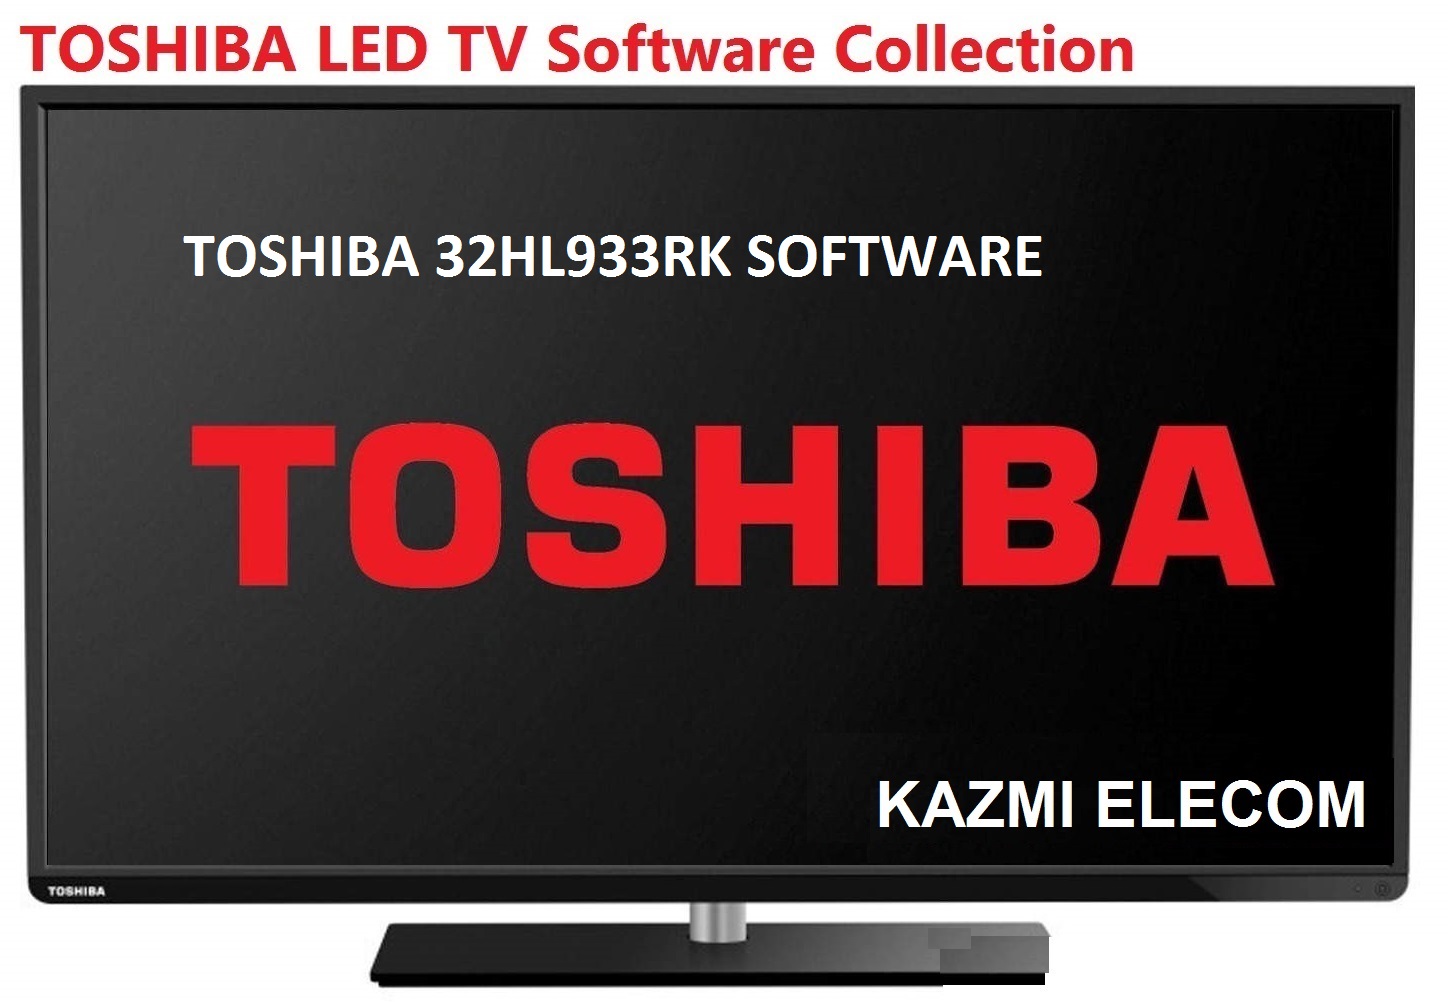 Toshiba 32Hl933Rk